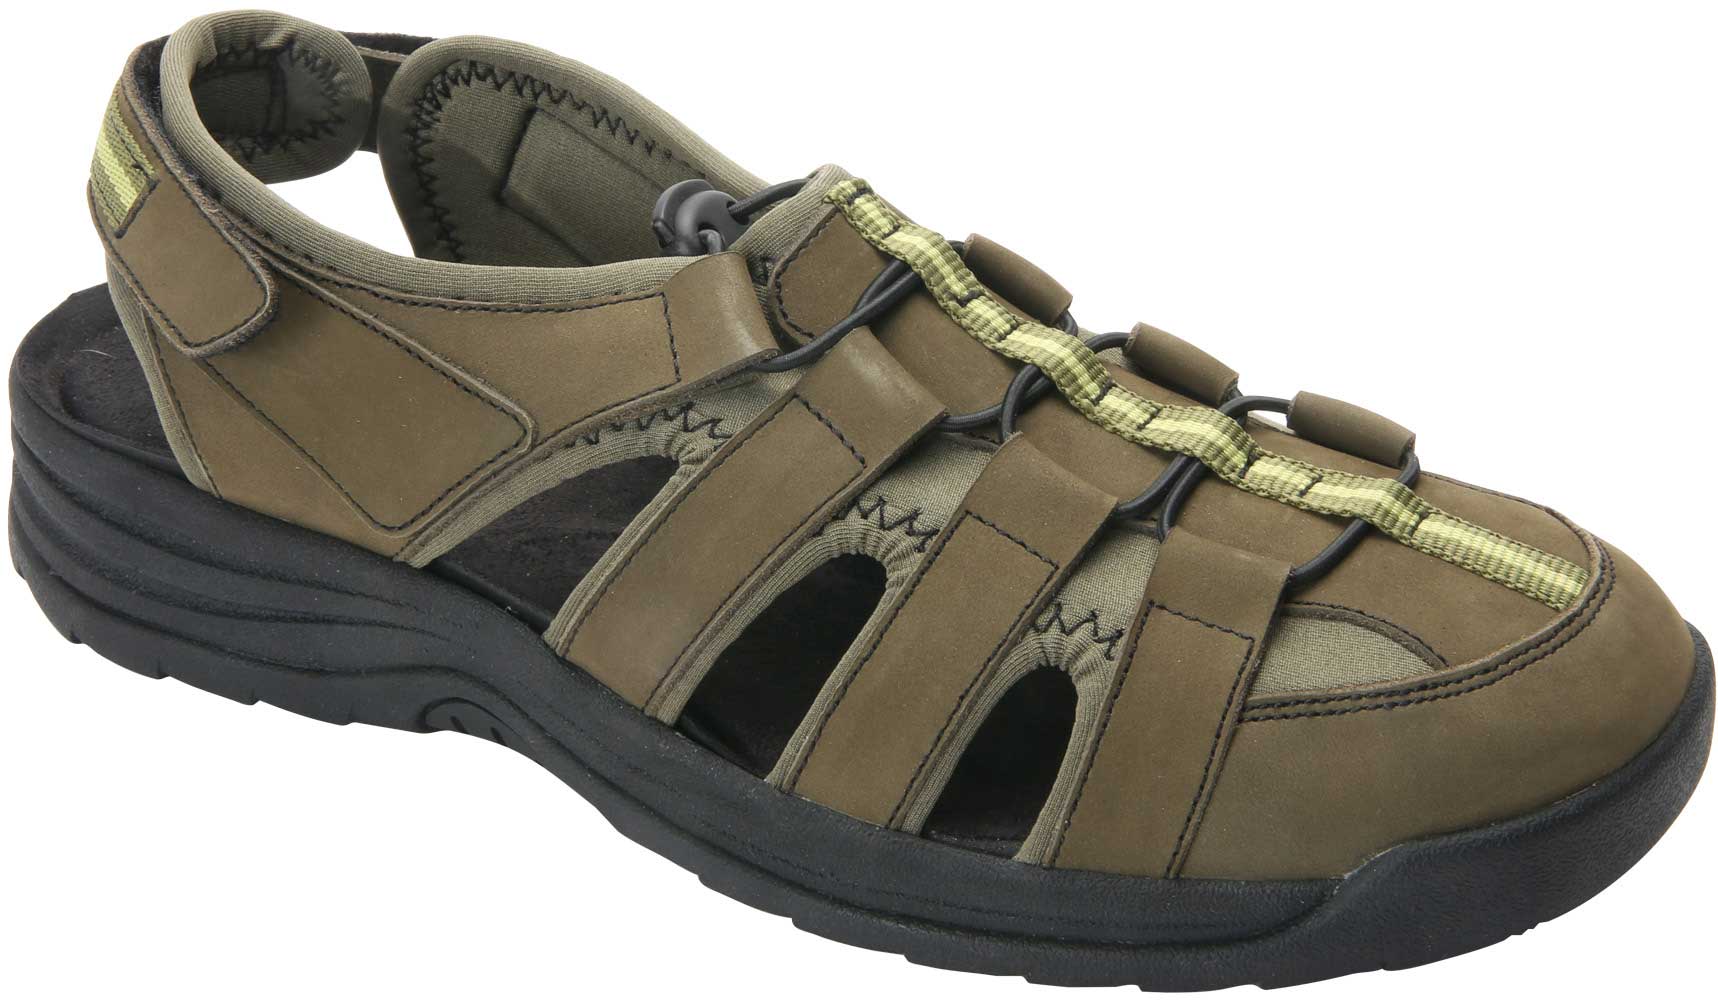 Drew Shoes Hamilton 47708 - Men's Casual Comfort Therapeutic Sandal